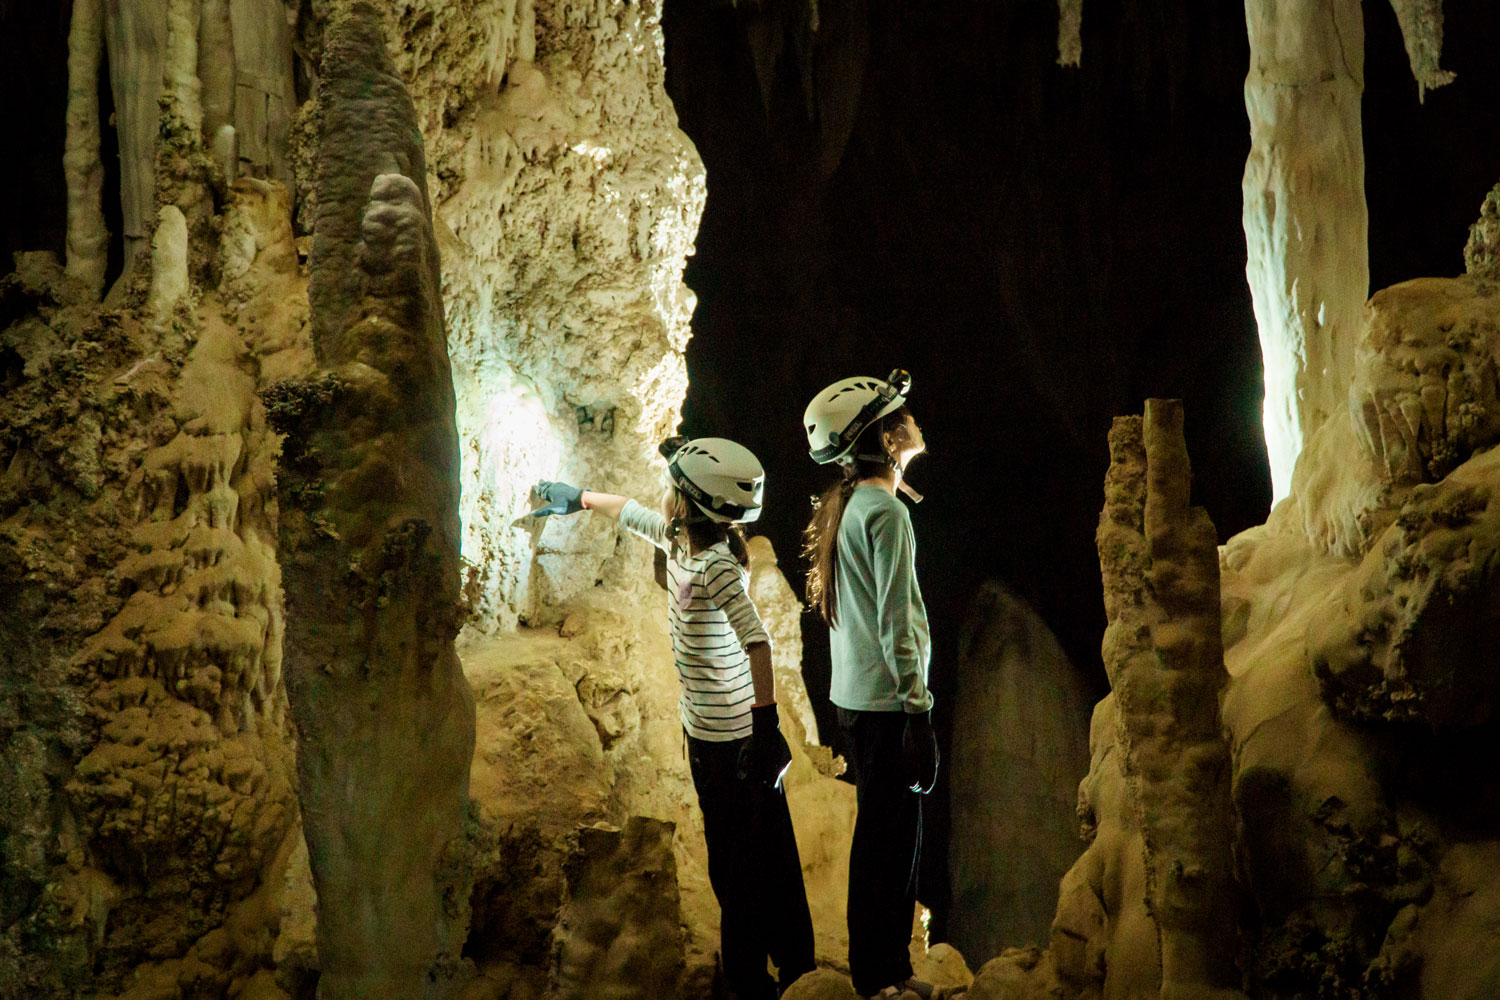 Exploring magnificent cave formations.